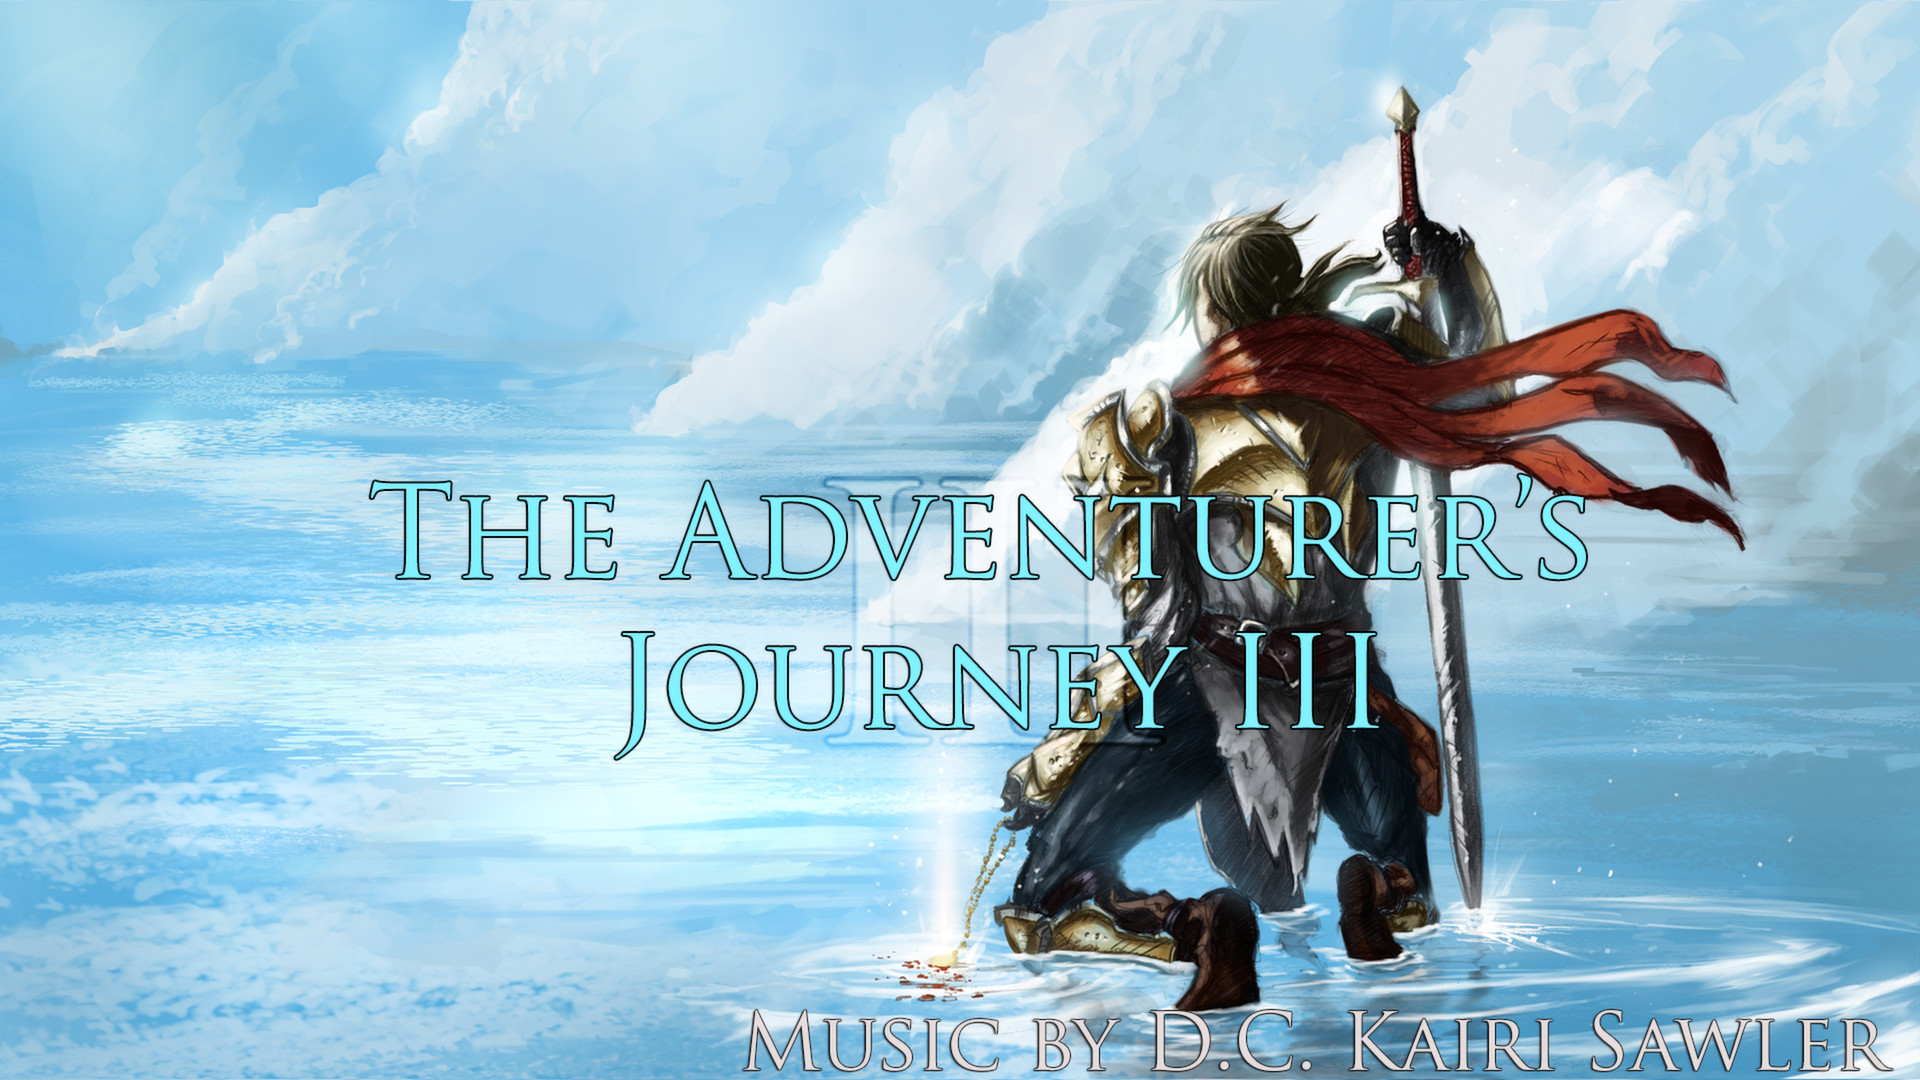 RPG Maker VX Ace - The Adventurer's Journey III DLC Steam CD Key